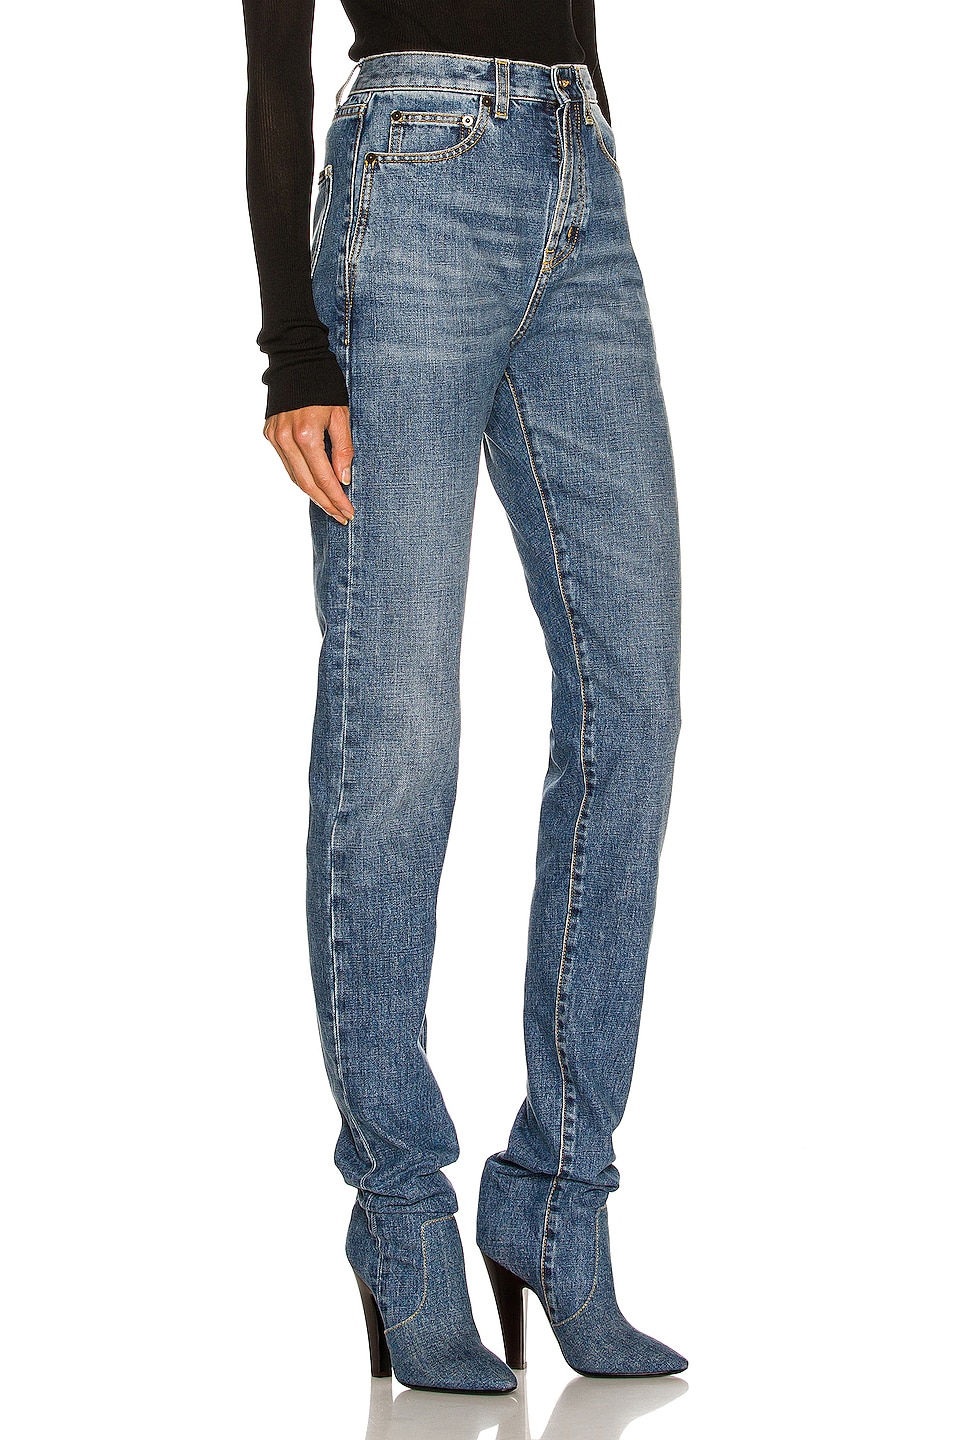 Saint Laurent Koller Pantaboots in Scratch Blue Jeans | FWRD